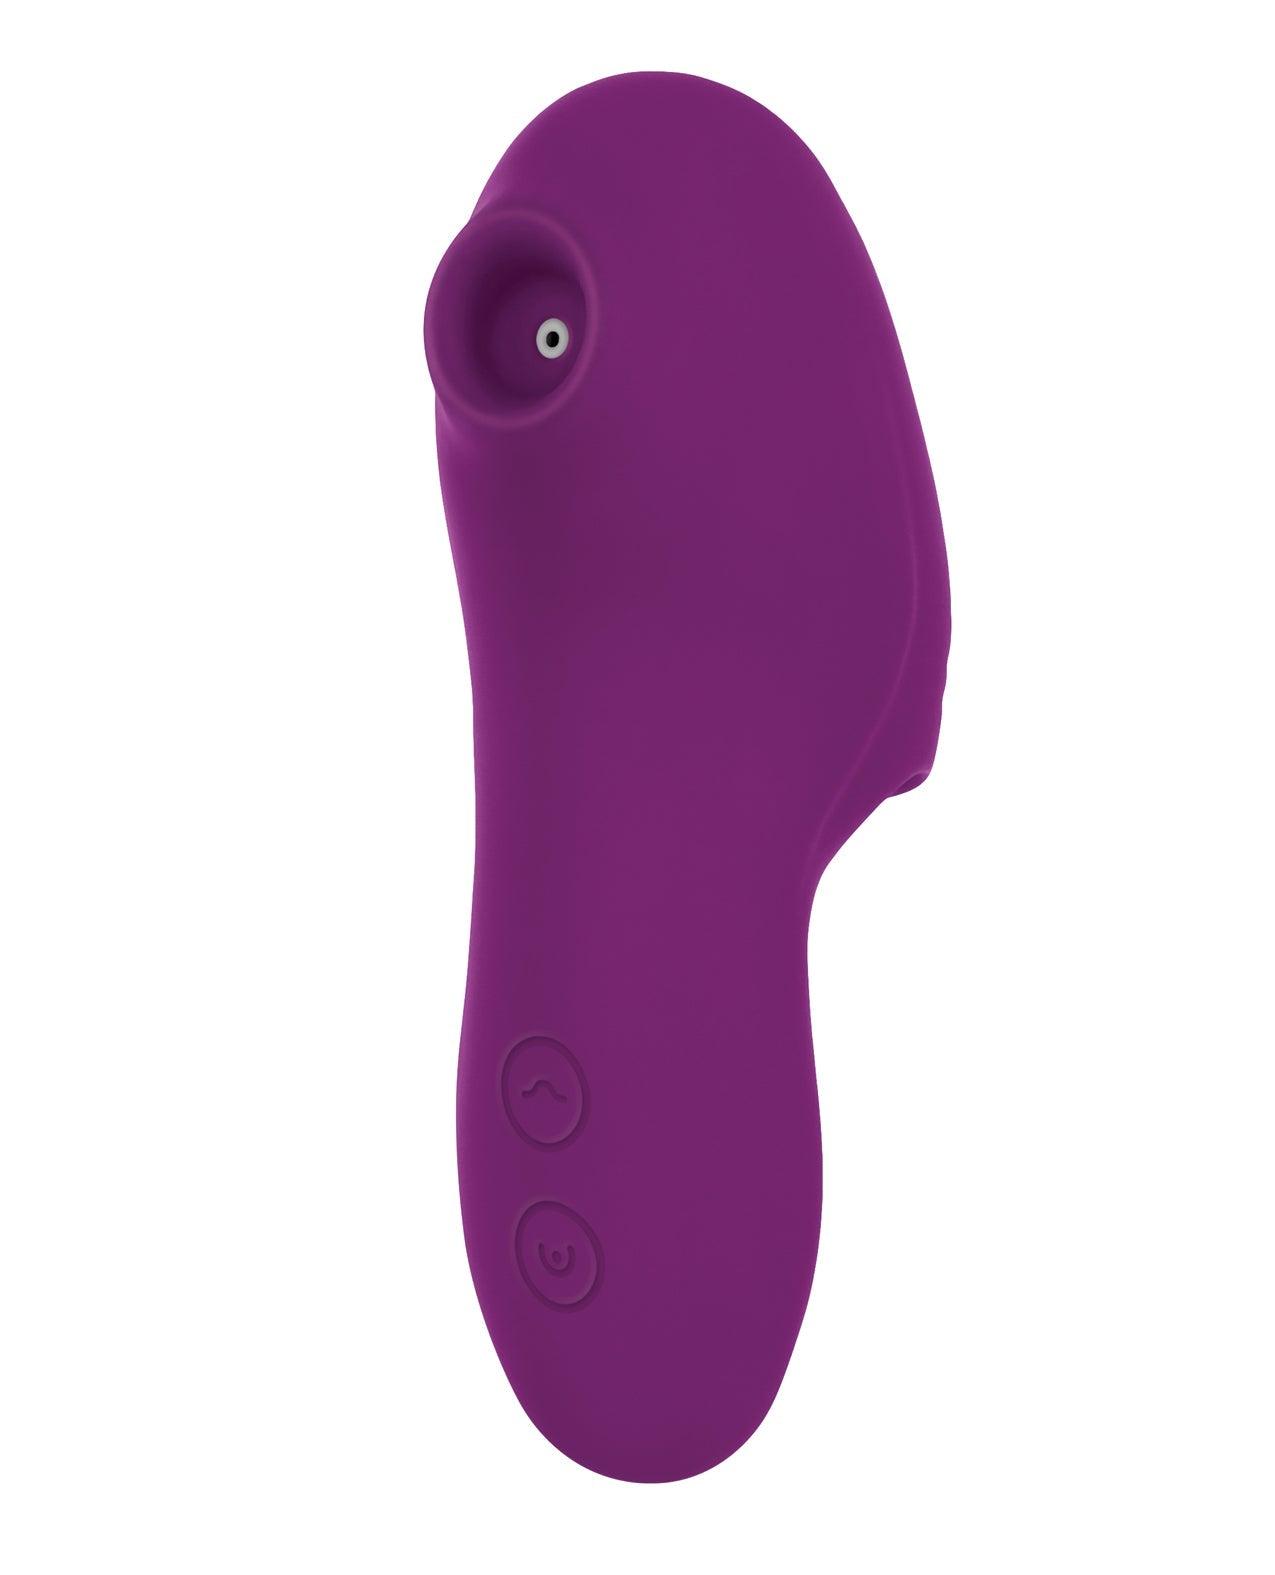 Evolved Sucker For You Finger Vibe - Purple - {{ SEXYEONE }}